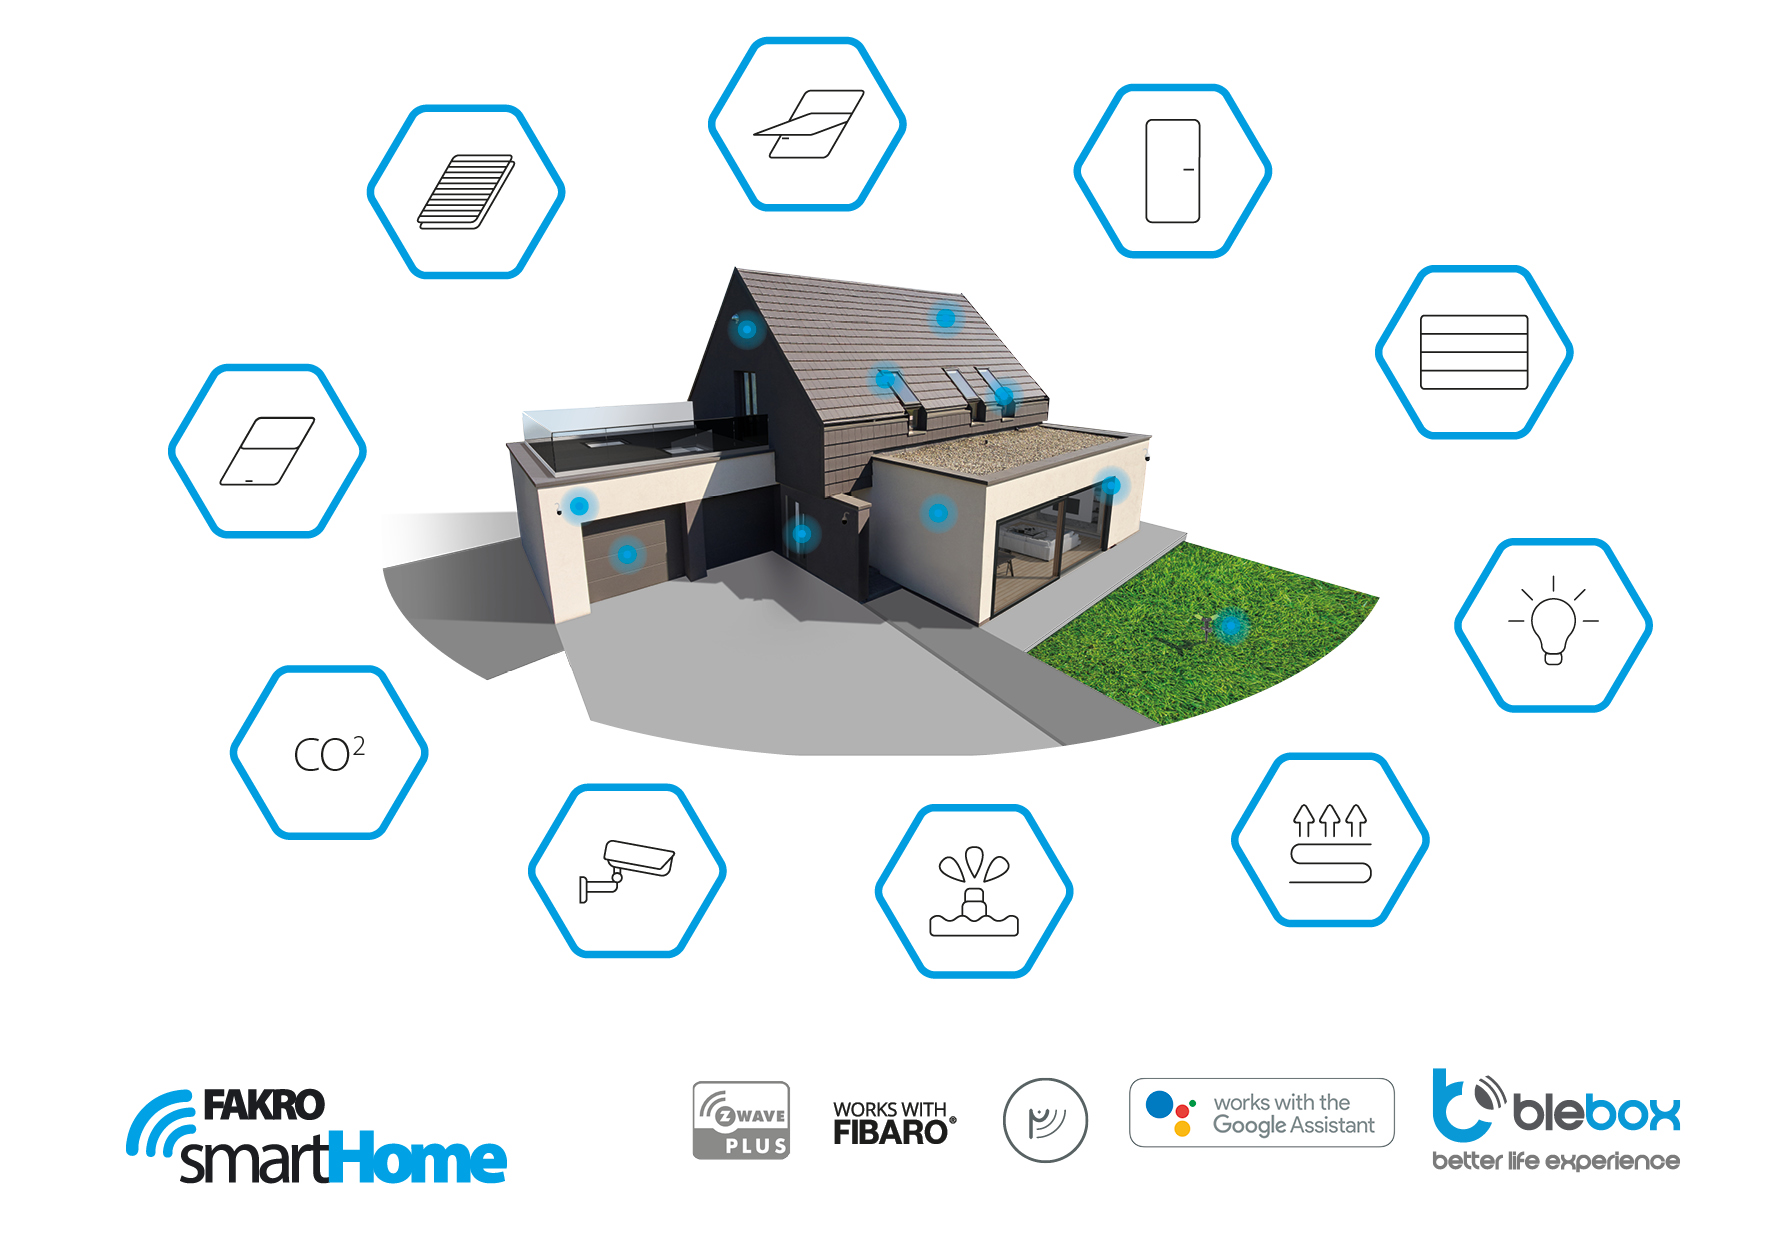 Projekt FAKRO Smart Home